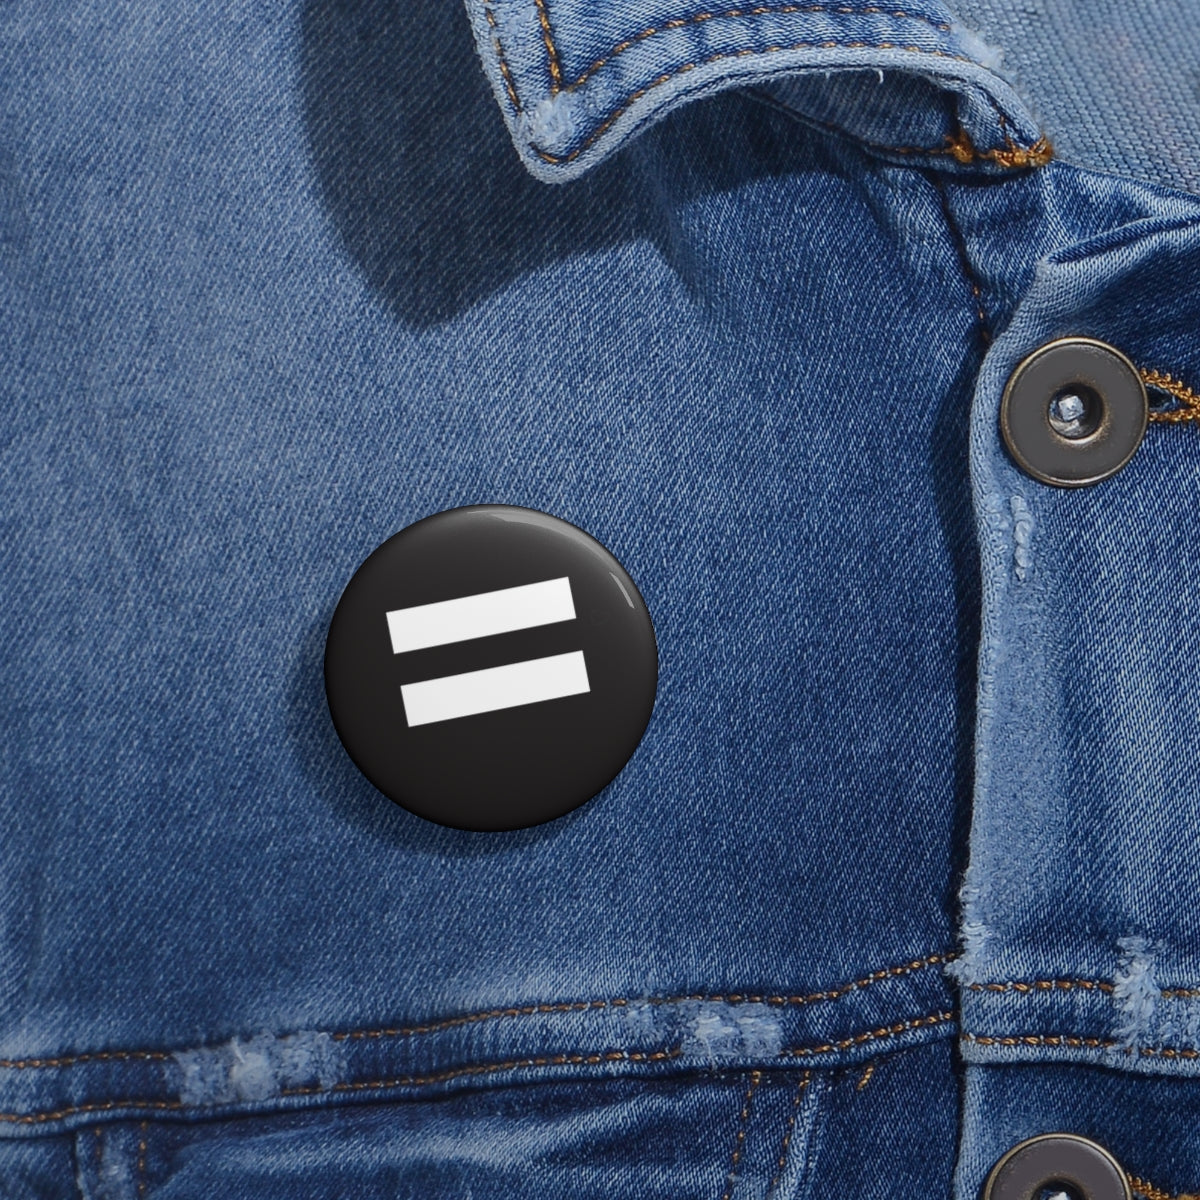 EQUALITY Custom Pin Button